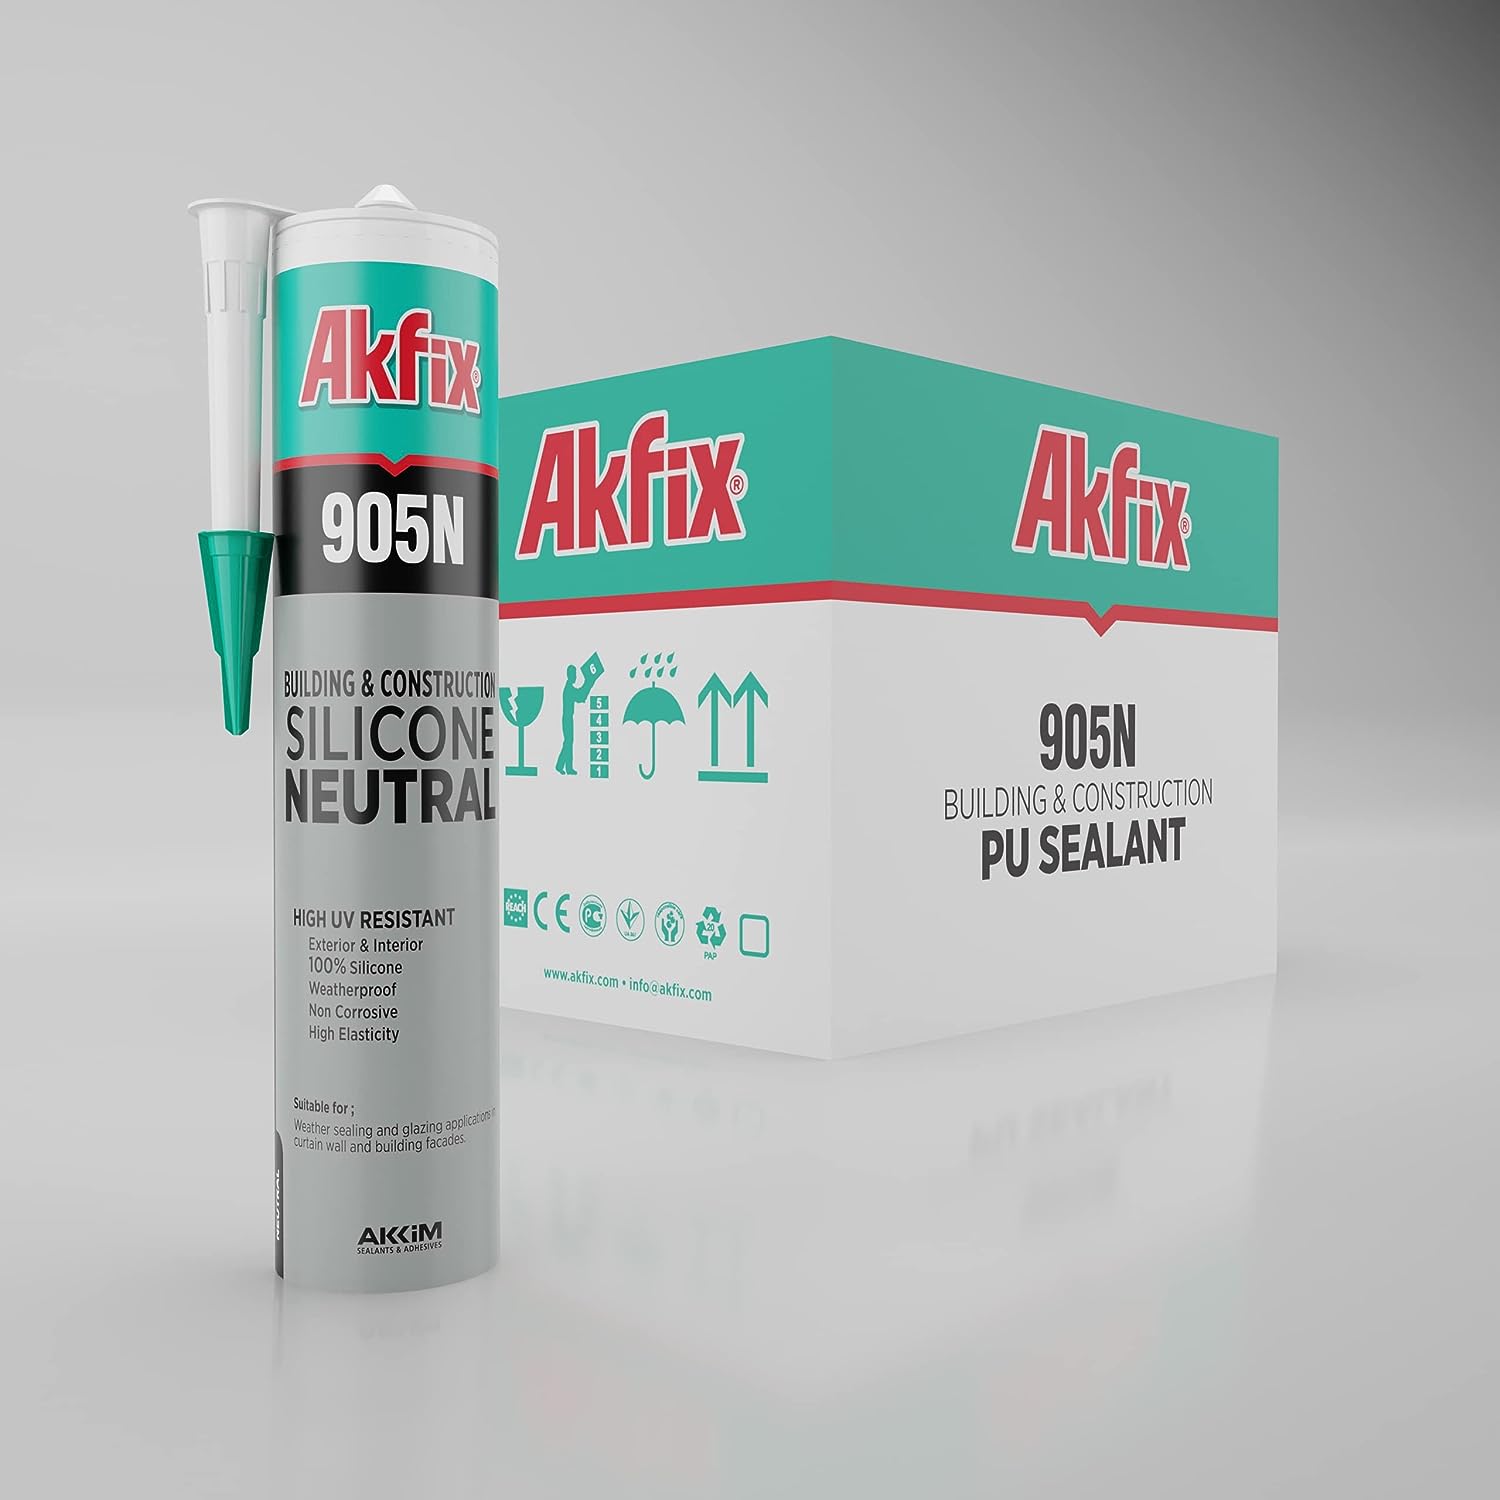 Akfix 905N Neutral 100% Pro Silicone Sealant (Building & Construction) 10.5 Oz/310Ml